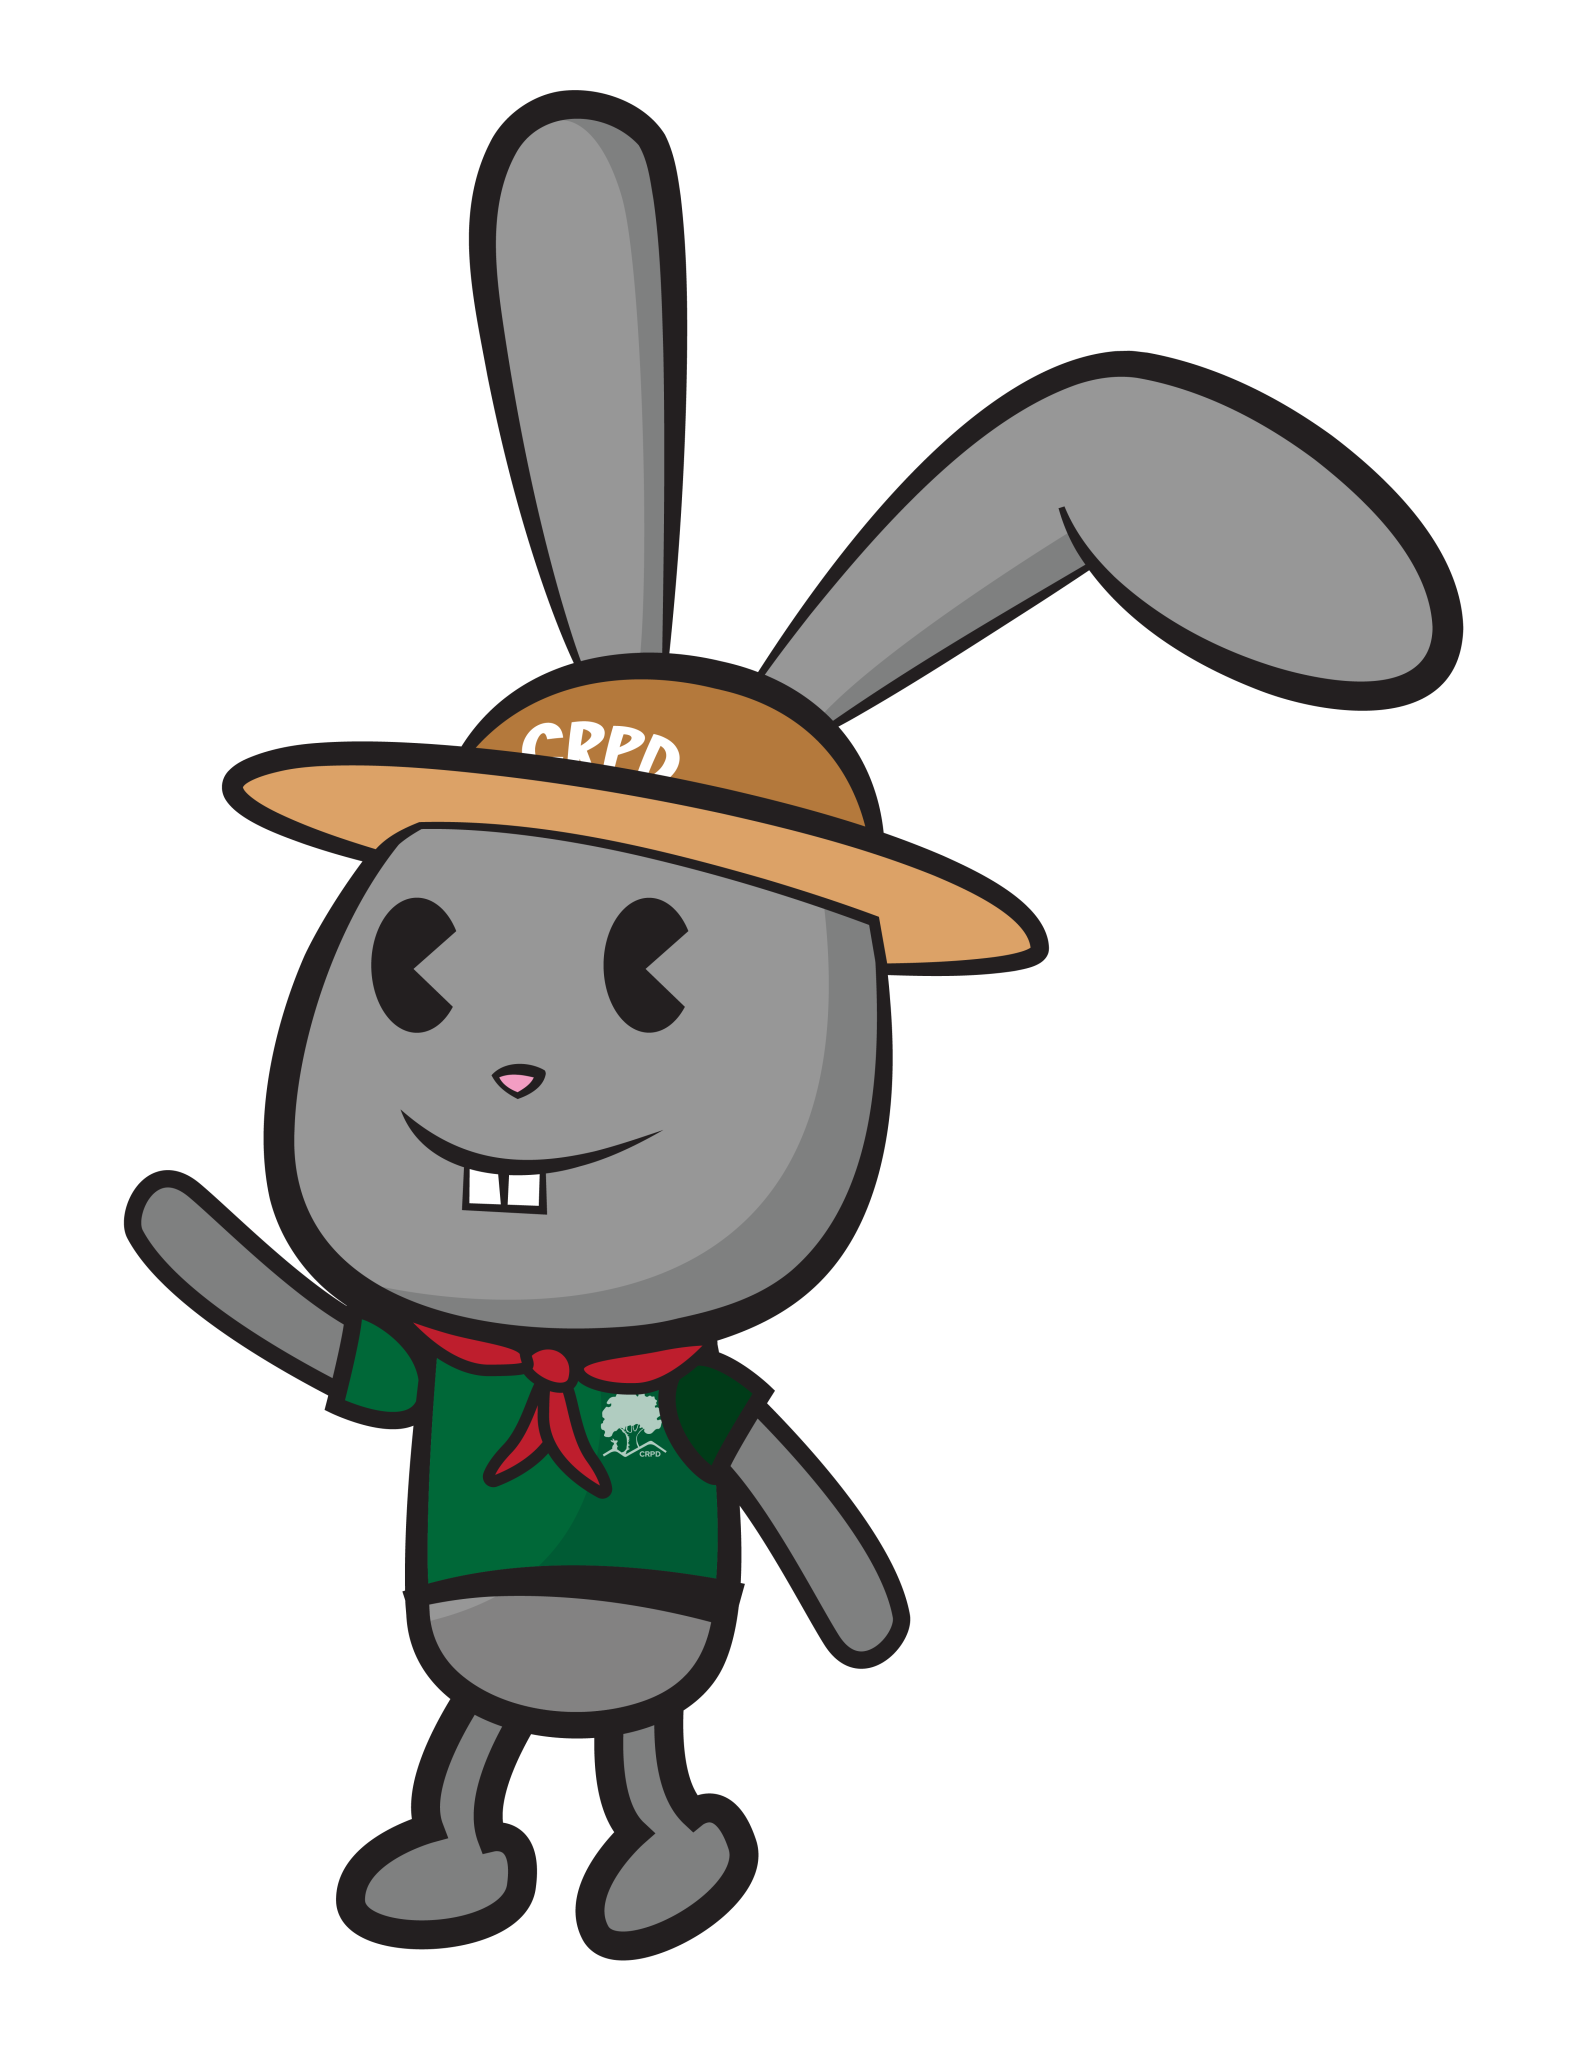 image of rabbit mascot